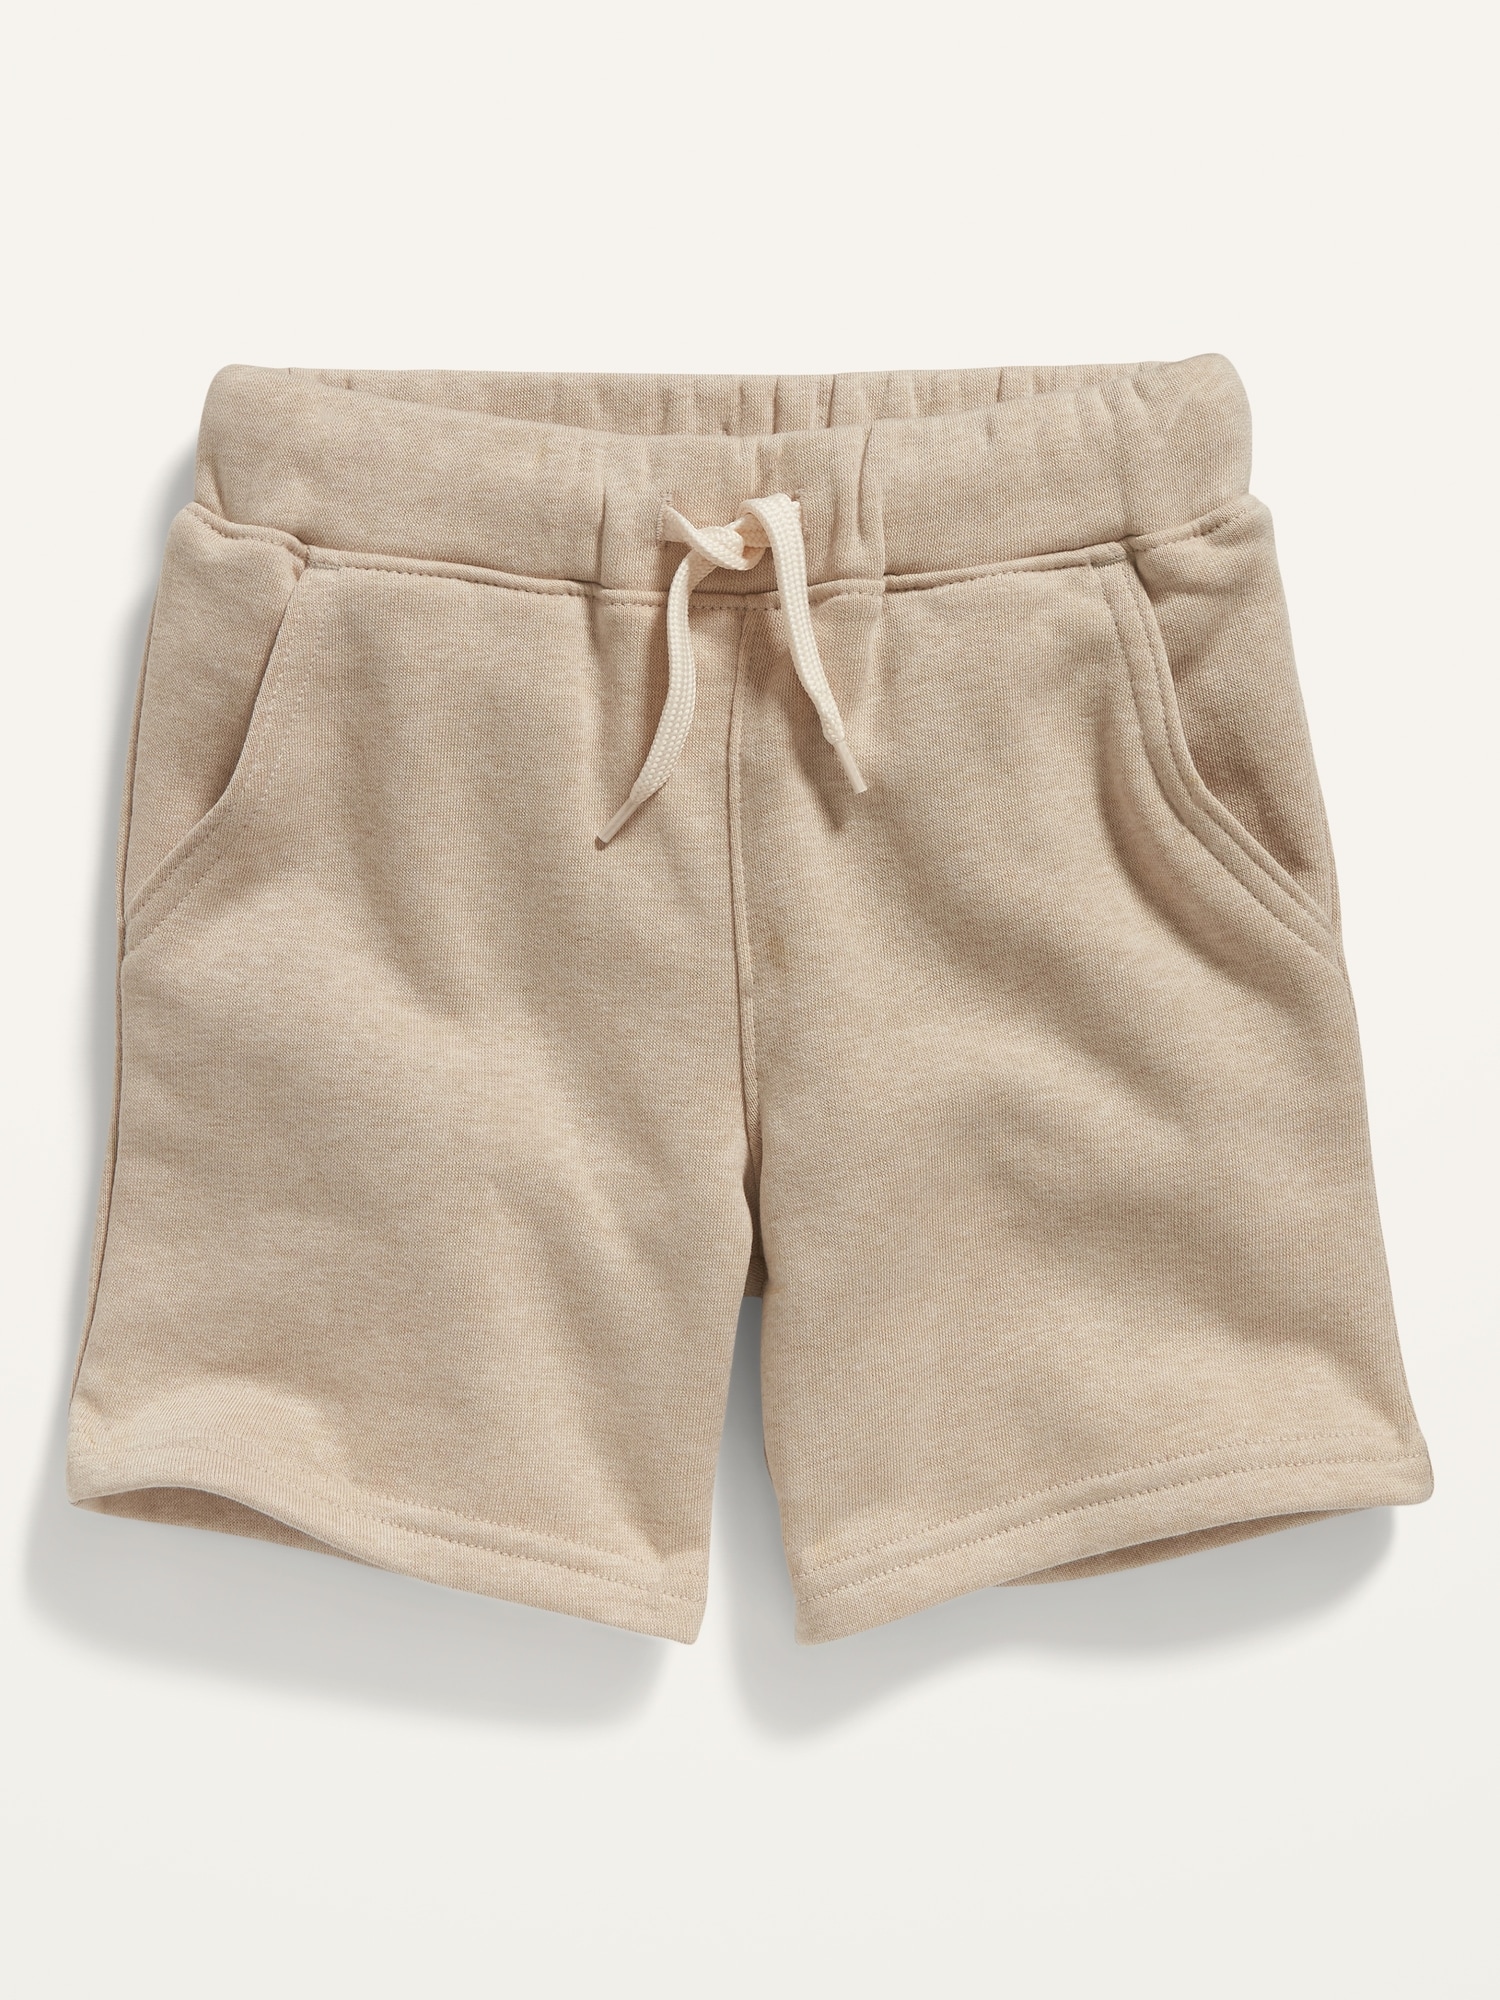 Unisex Functional-Drawstring Sweat Shorts for Toddler | Old Navy